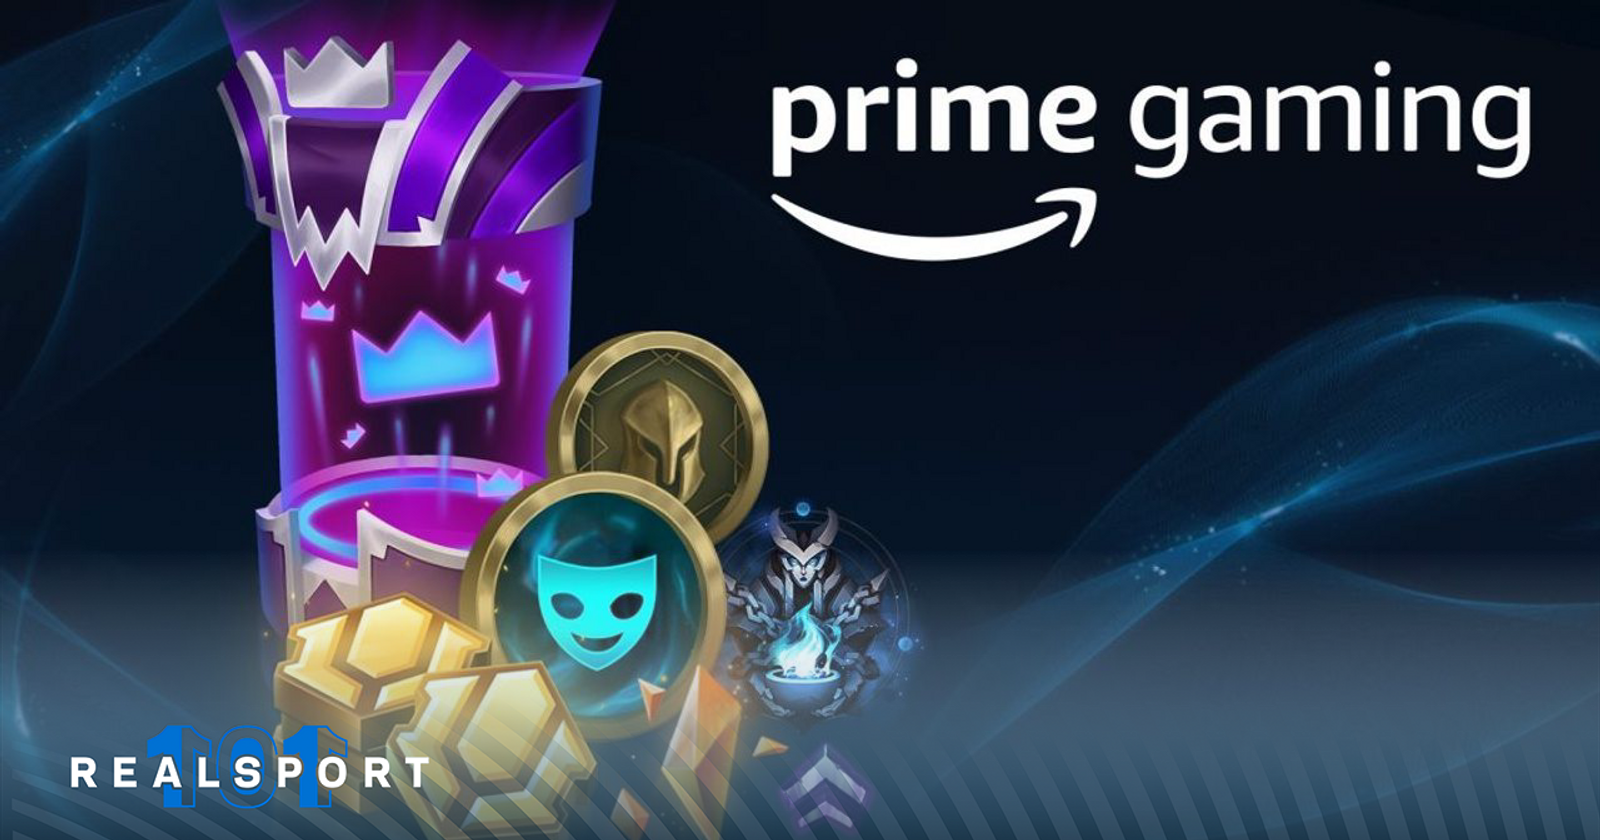 Genshin Impact Prime Gaming rewards (July) - How to claim them